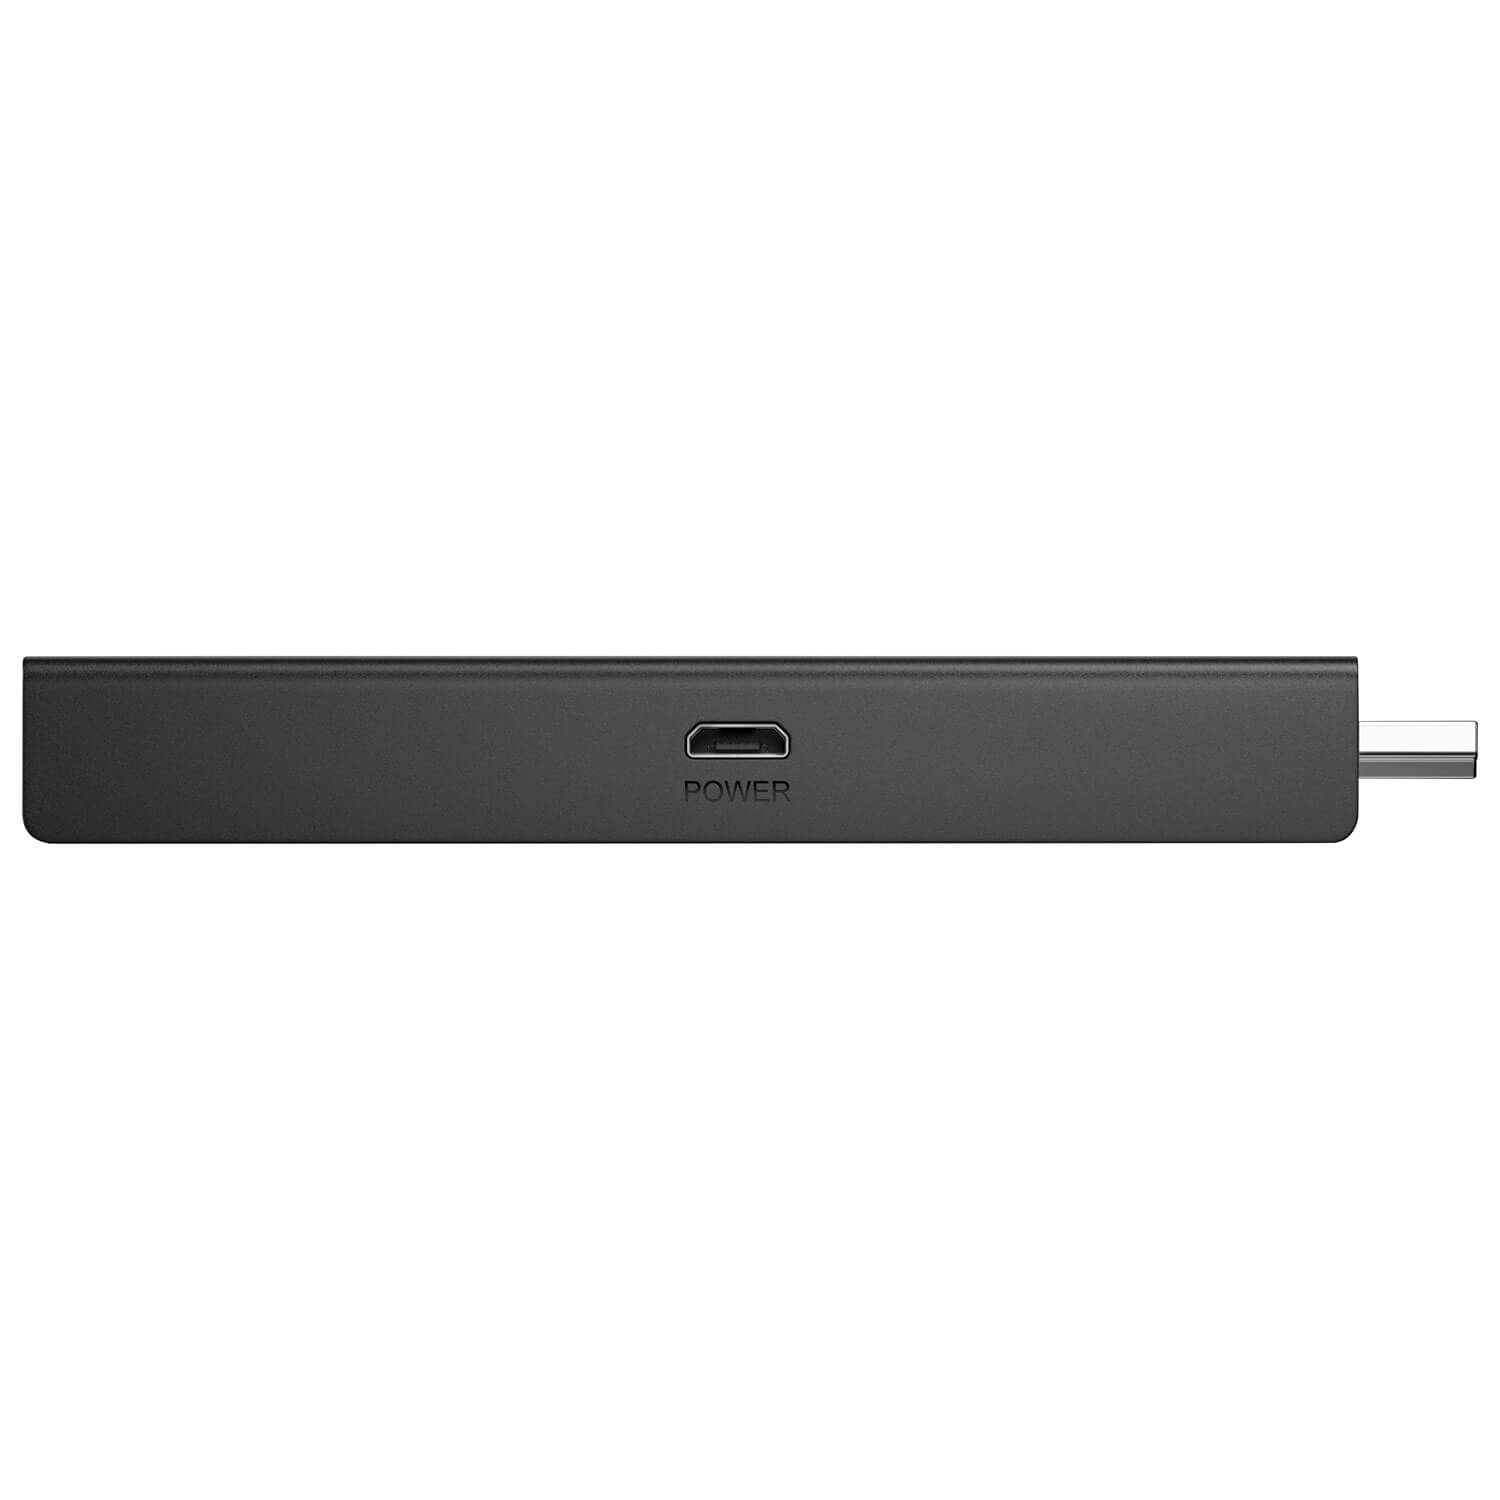 Home Appliance – Xiaomi MI TV Stick – Rangs Electronics Ltd.